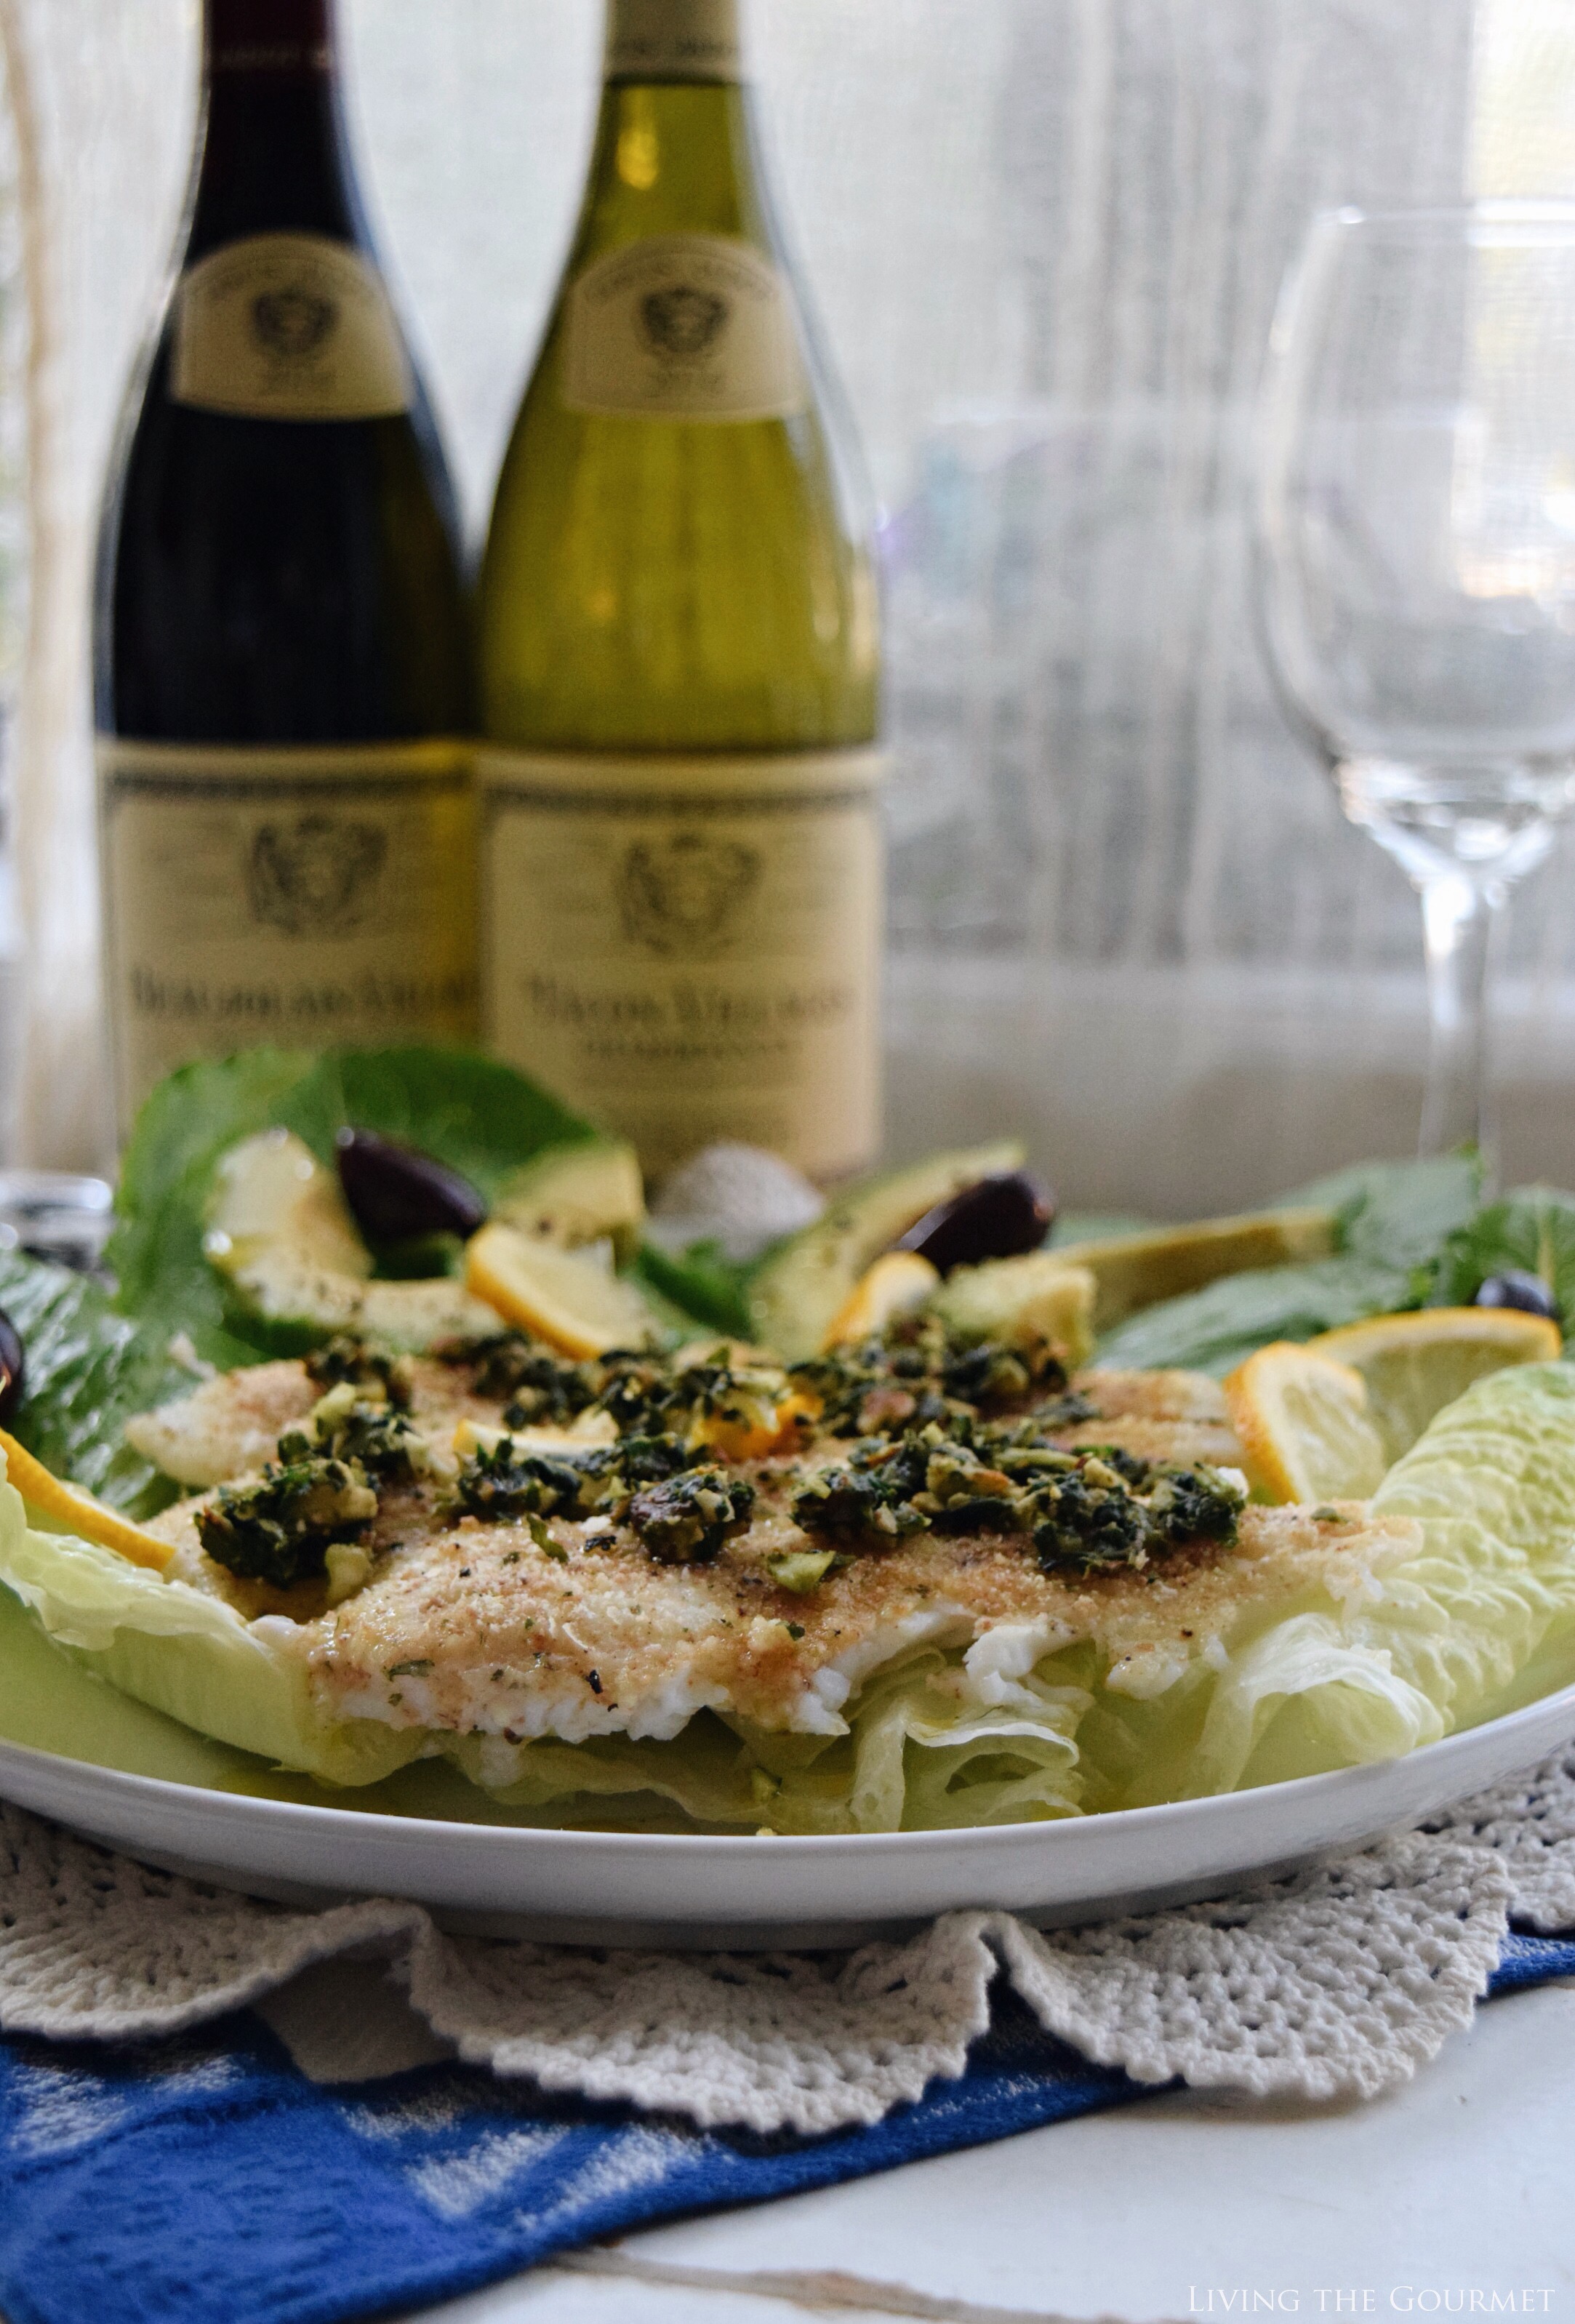 Living the Gourmet: Flounder Fillets with Pesto | #LoveJadot